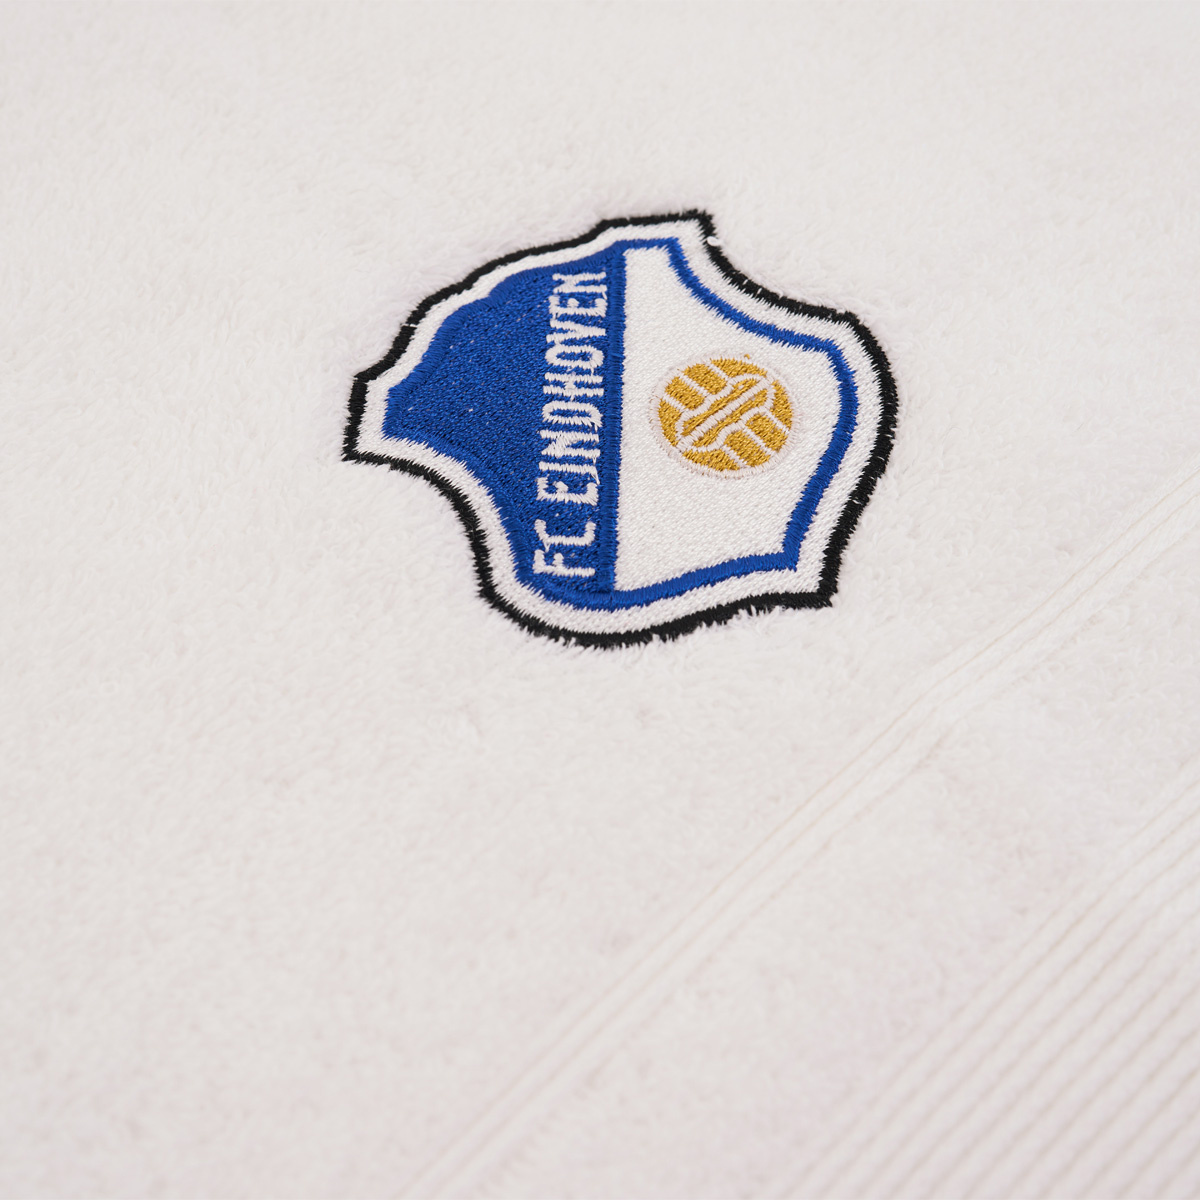 Topfanz Towel 50x100 White logo